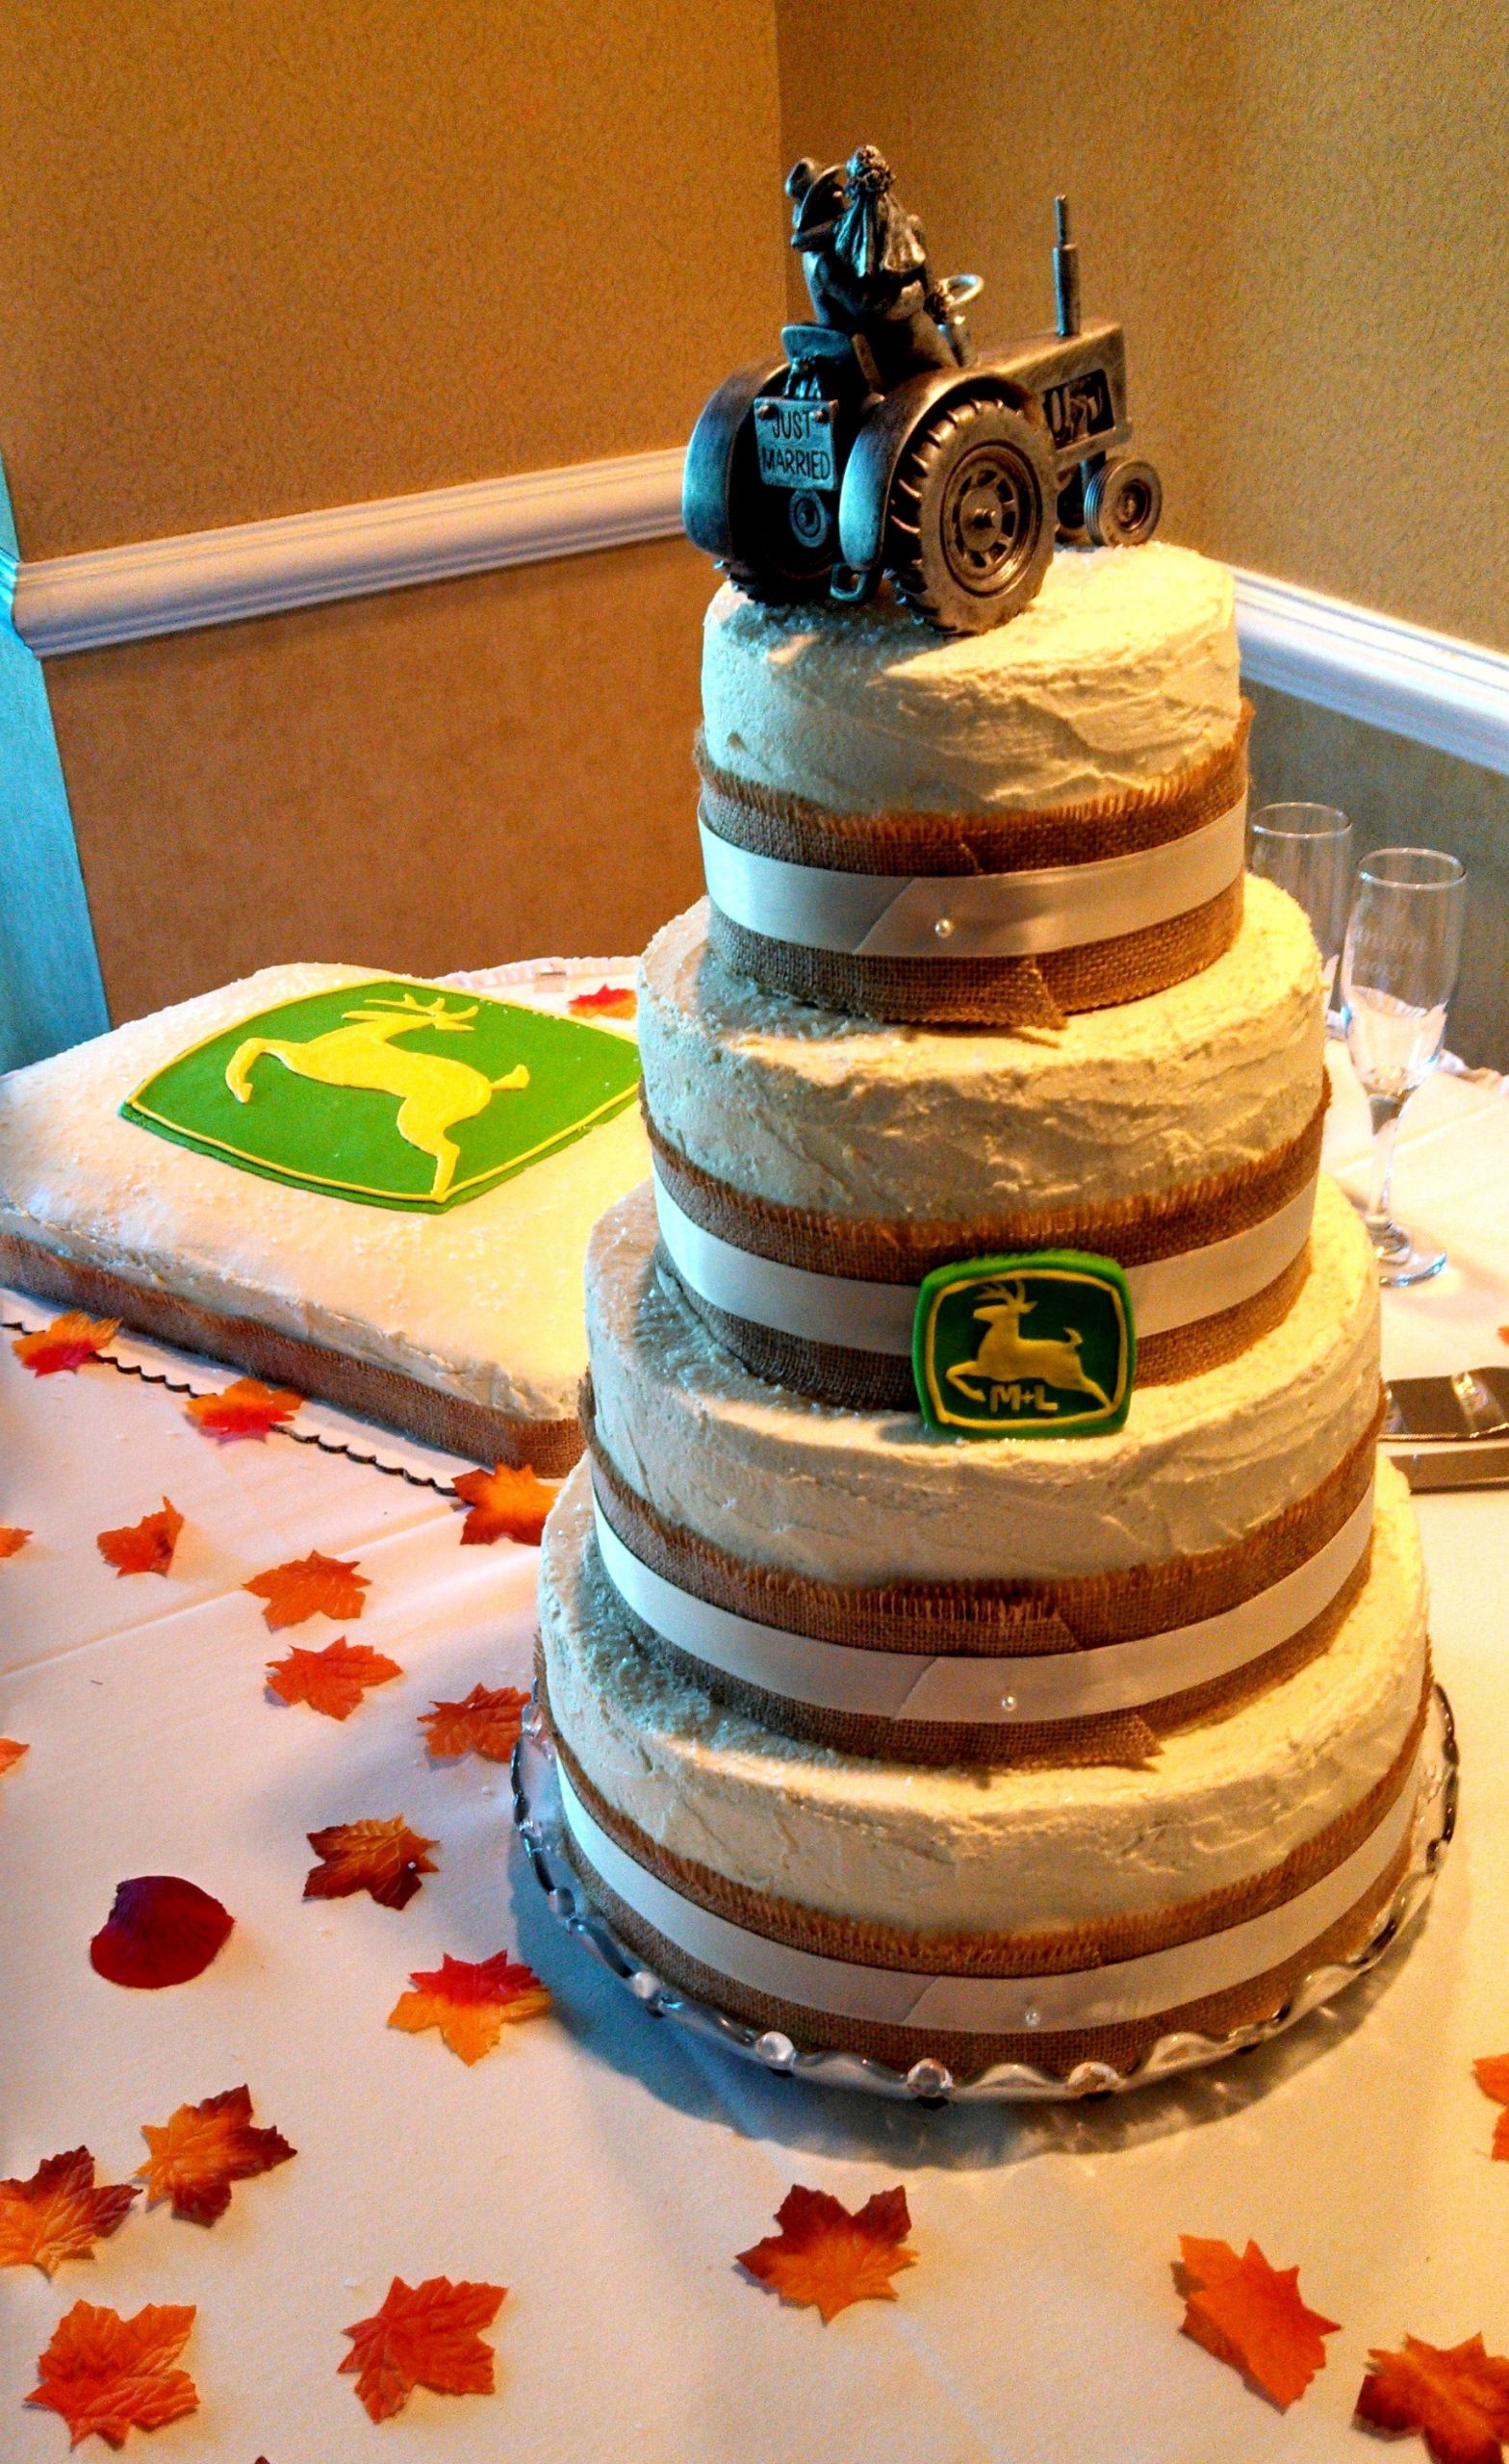 John Deere Wedding Cakes
 Rustic 4 Tier Wedding Cake And John Deere Groom s Cake